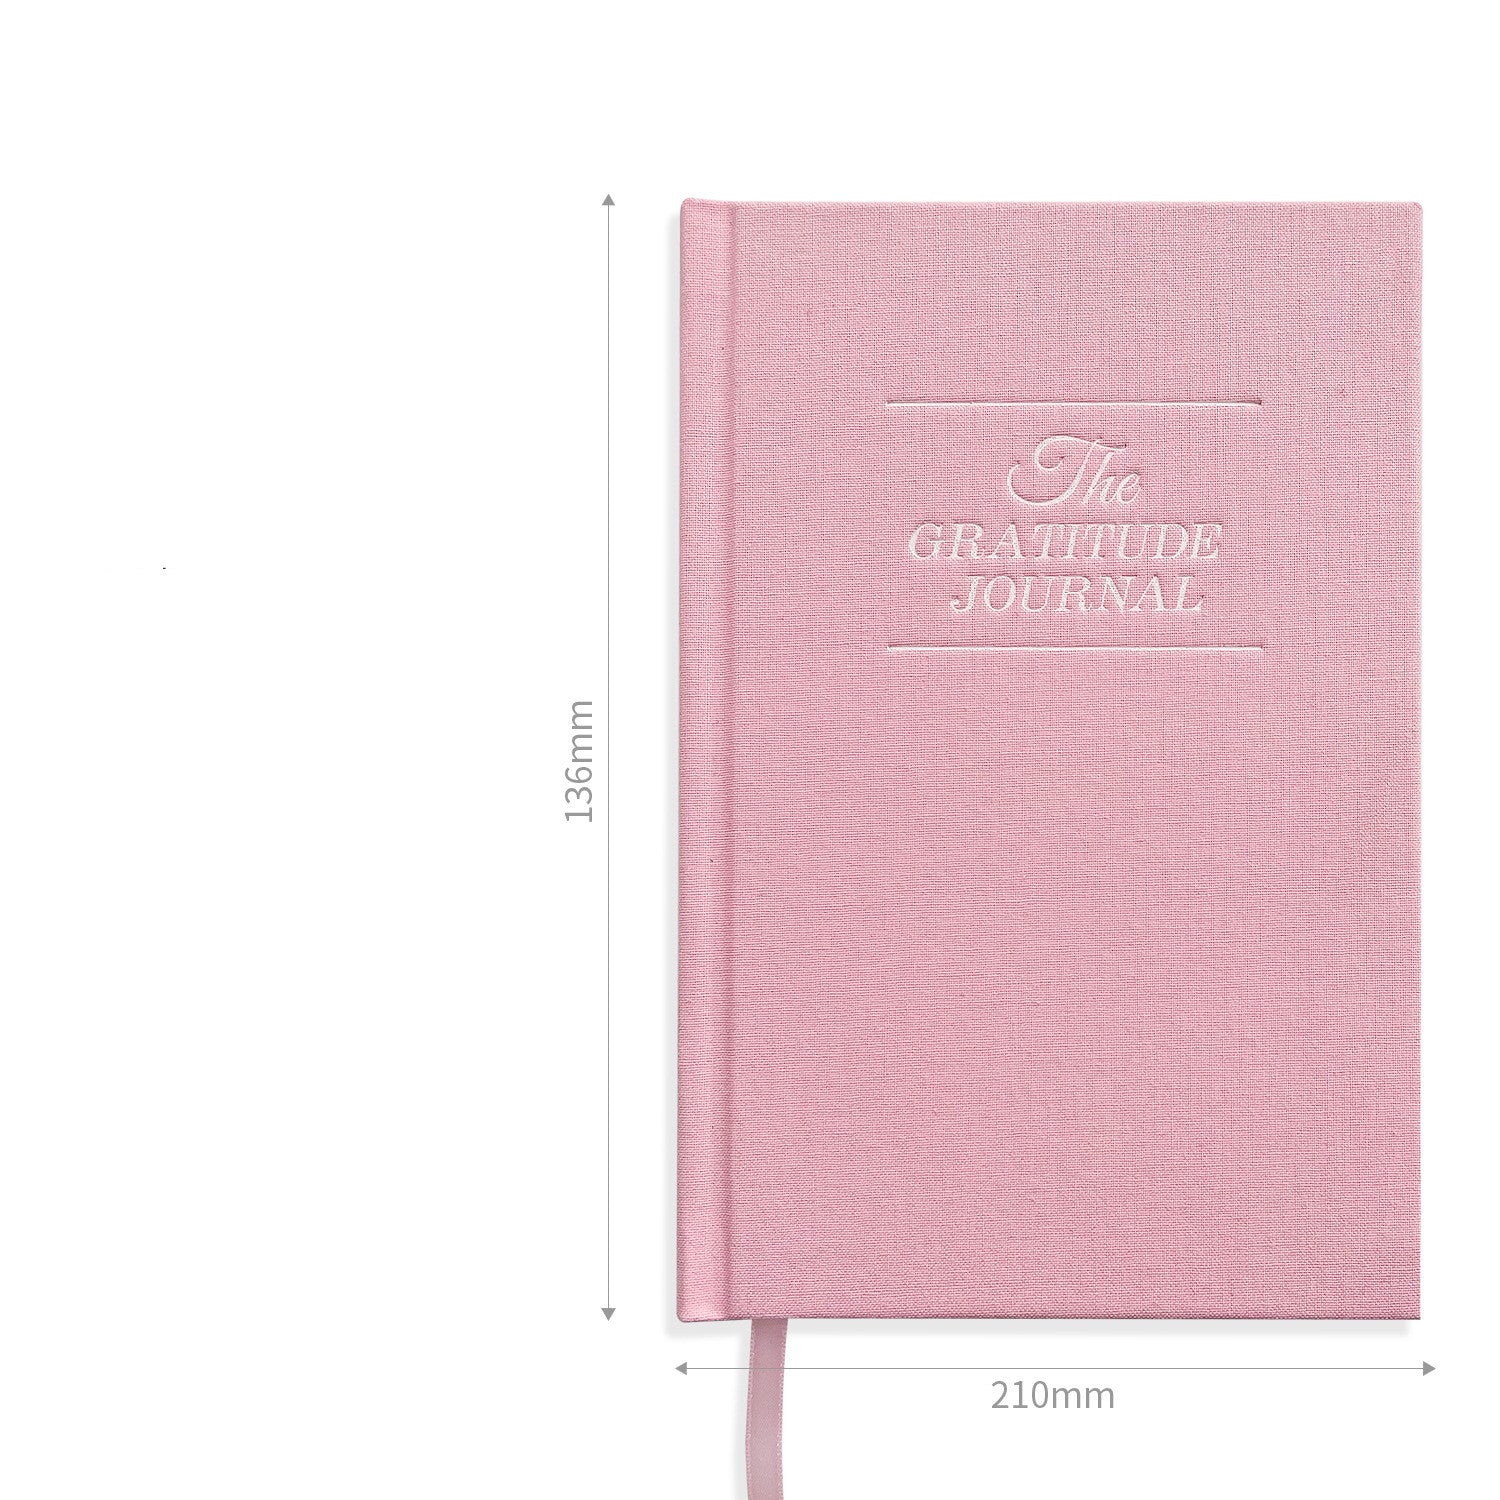 Gratitude Journal Prayer Think Notebook Diary Planner Agenda